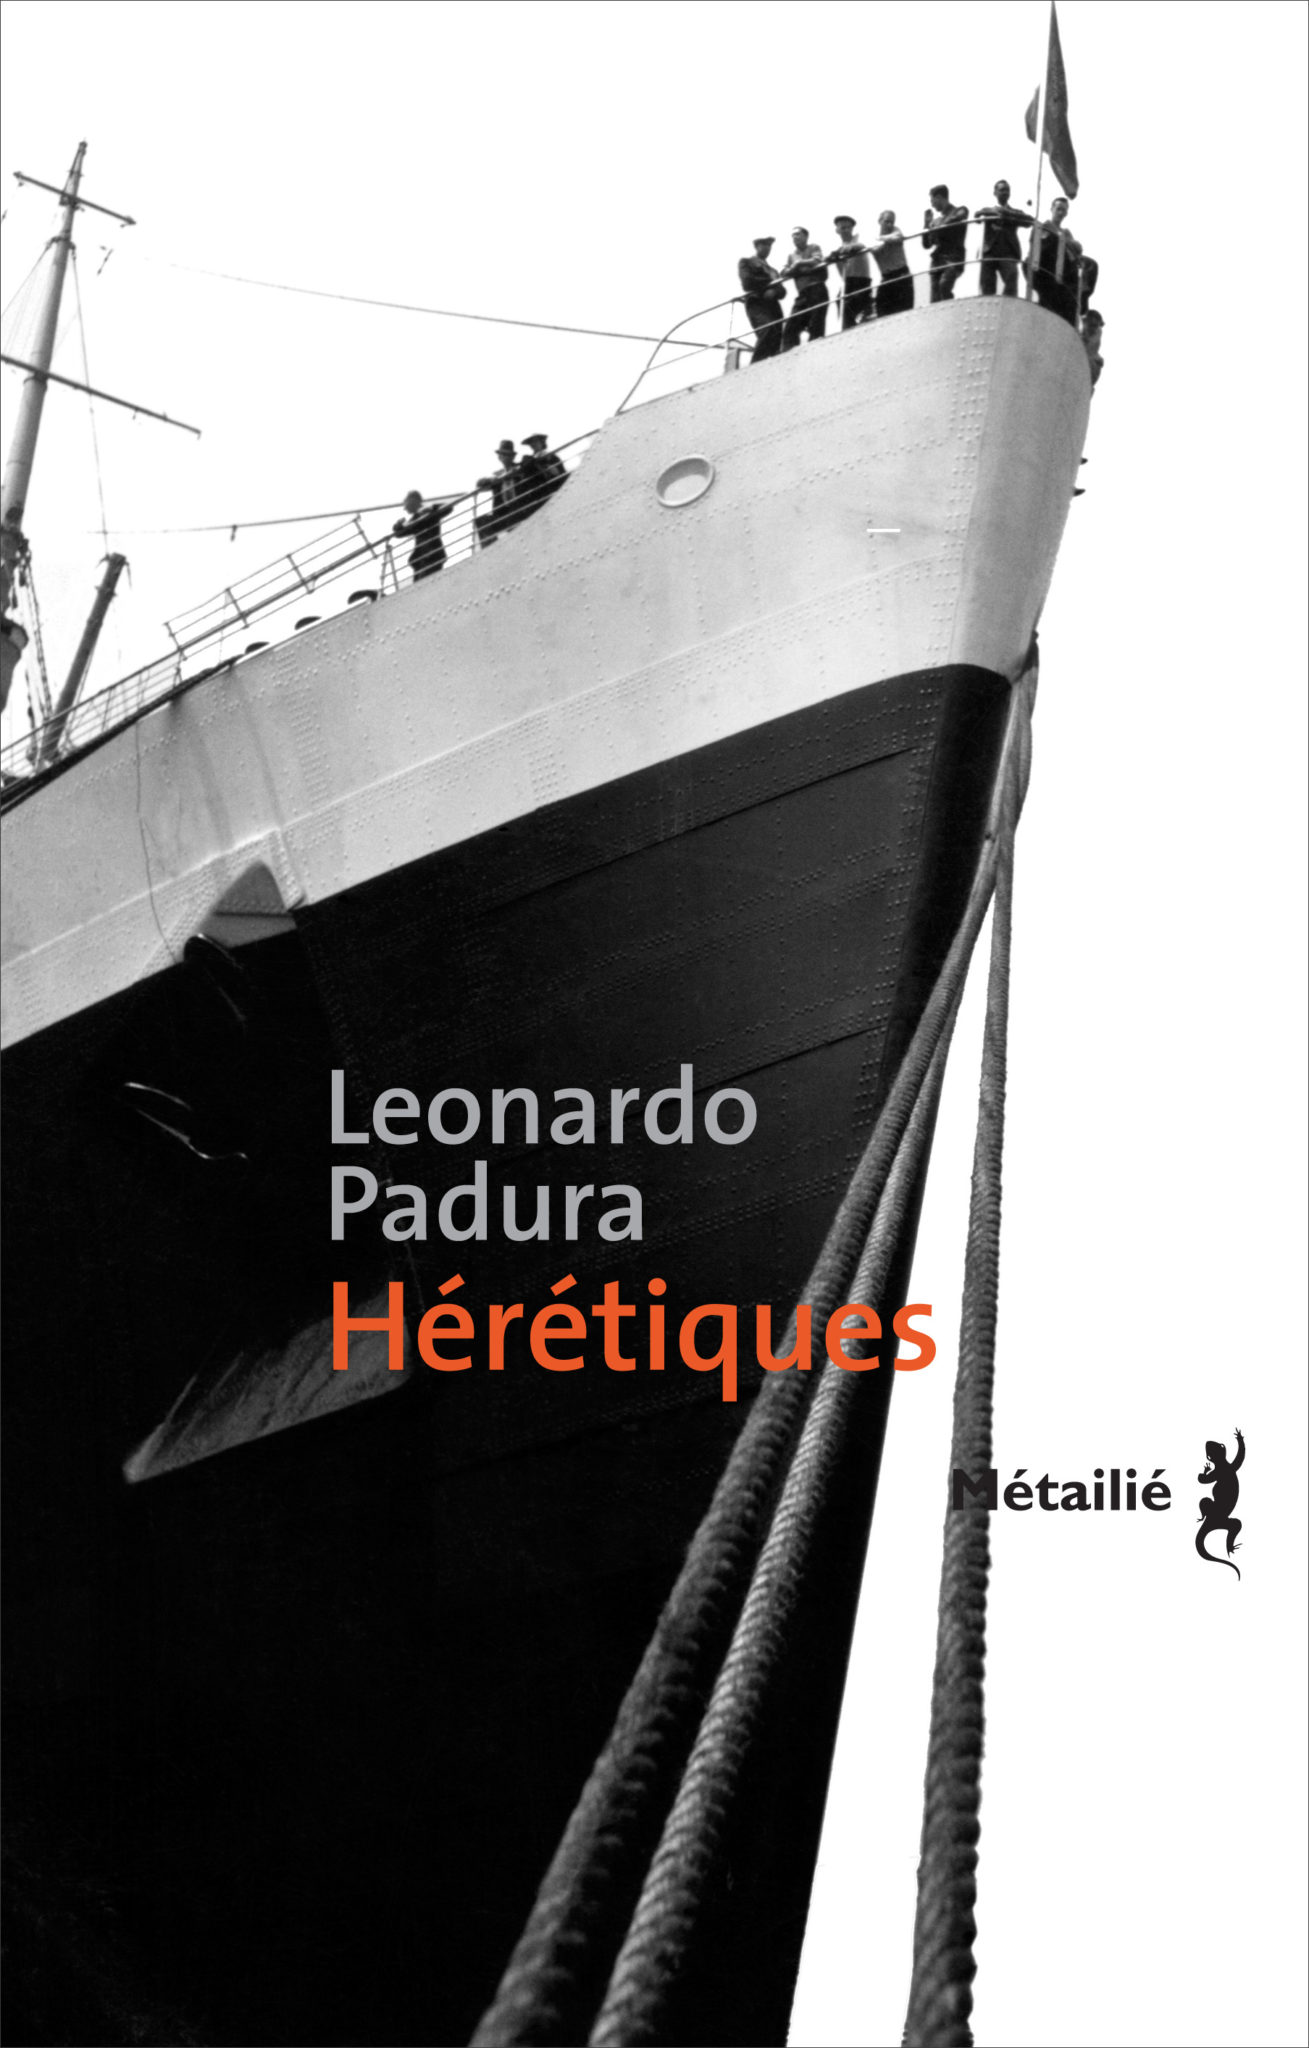 « Hérétiques » de Leonardo Padura, Métaillé